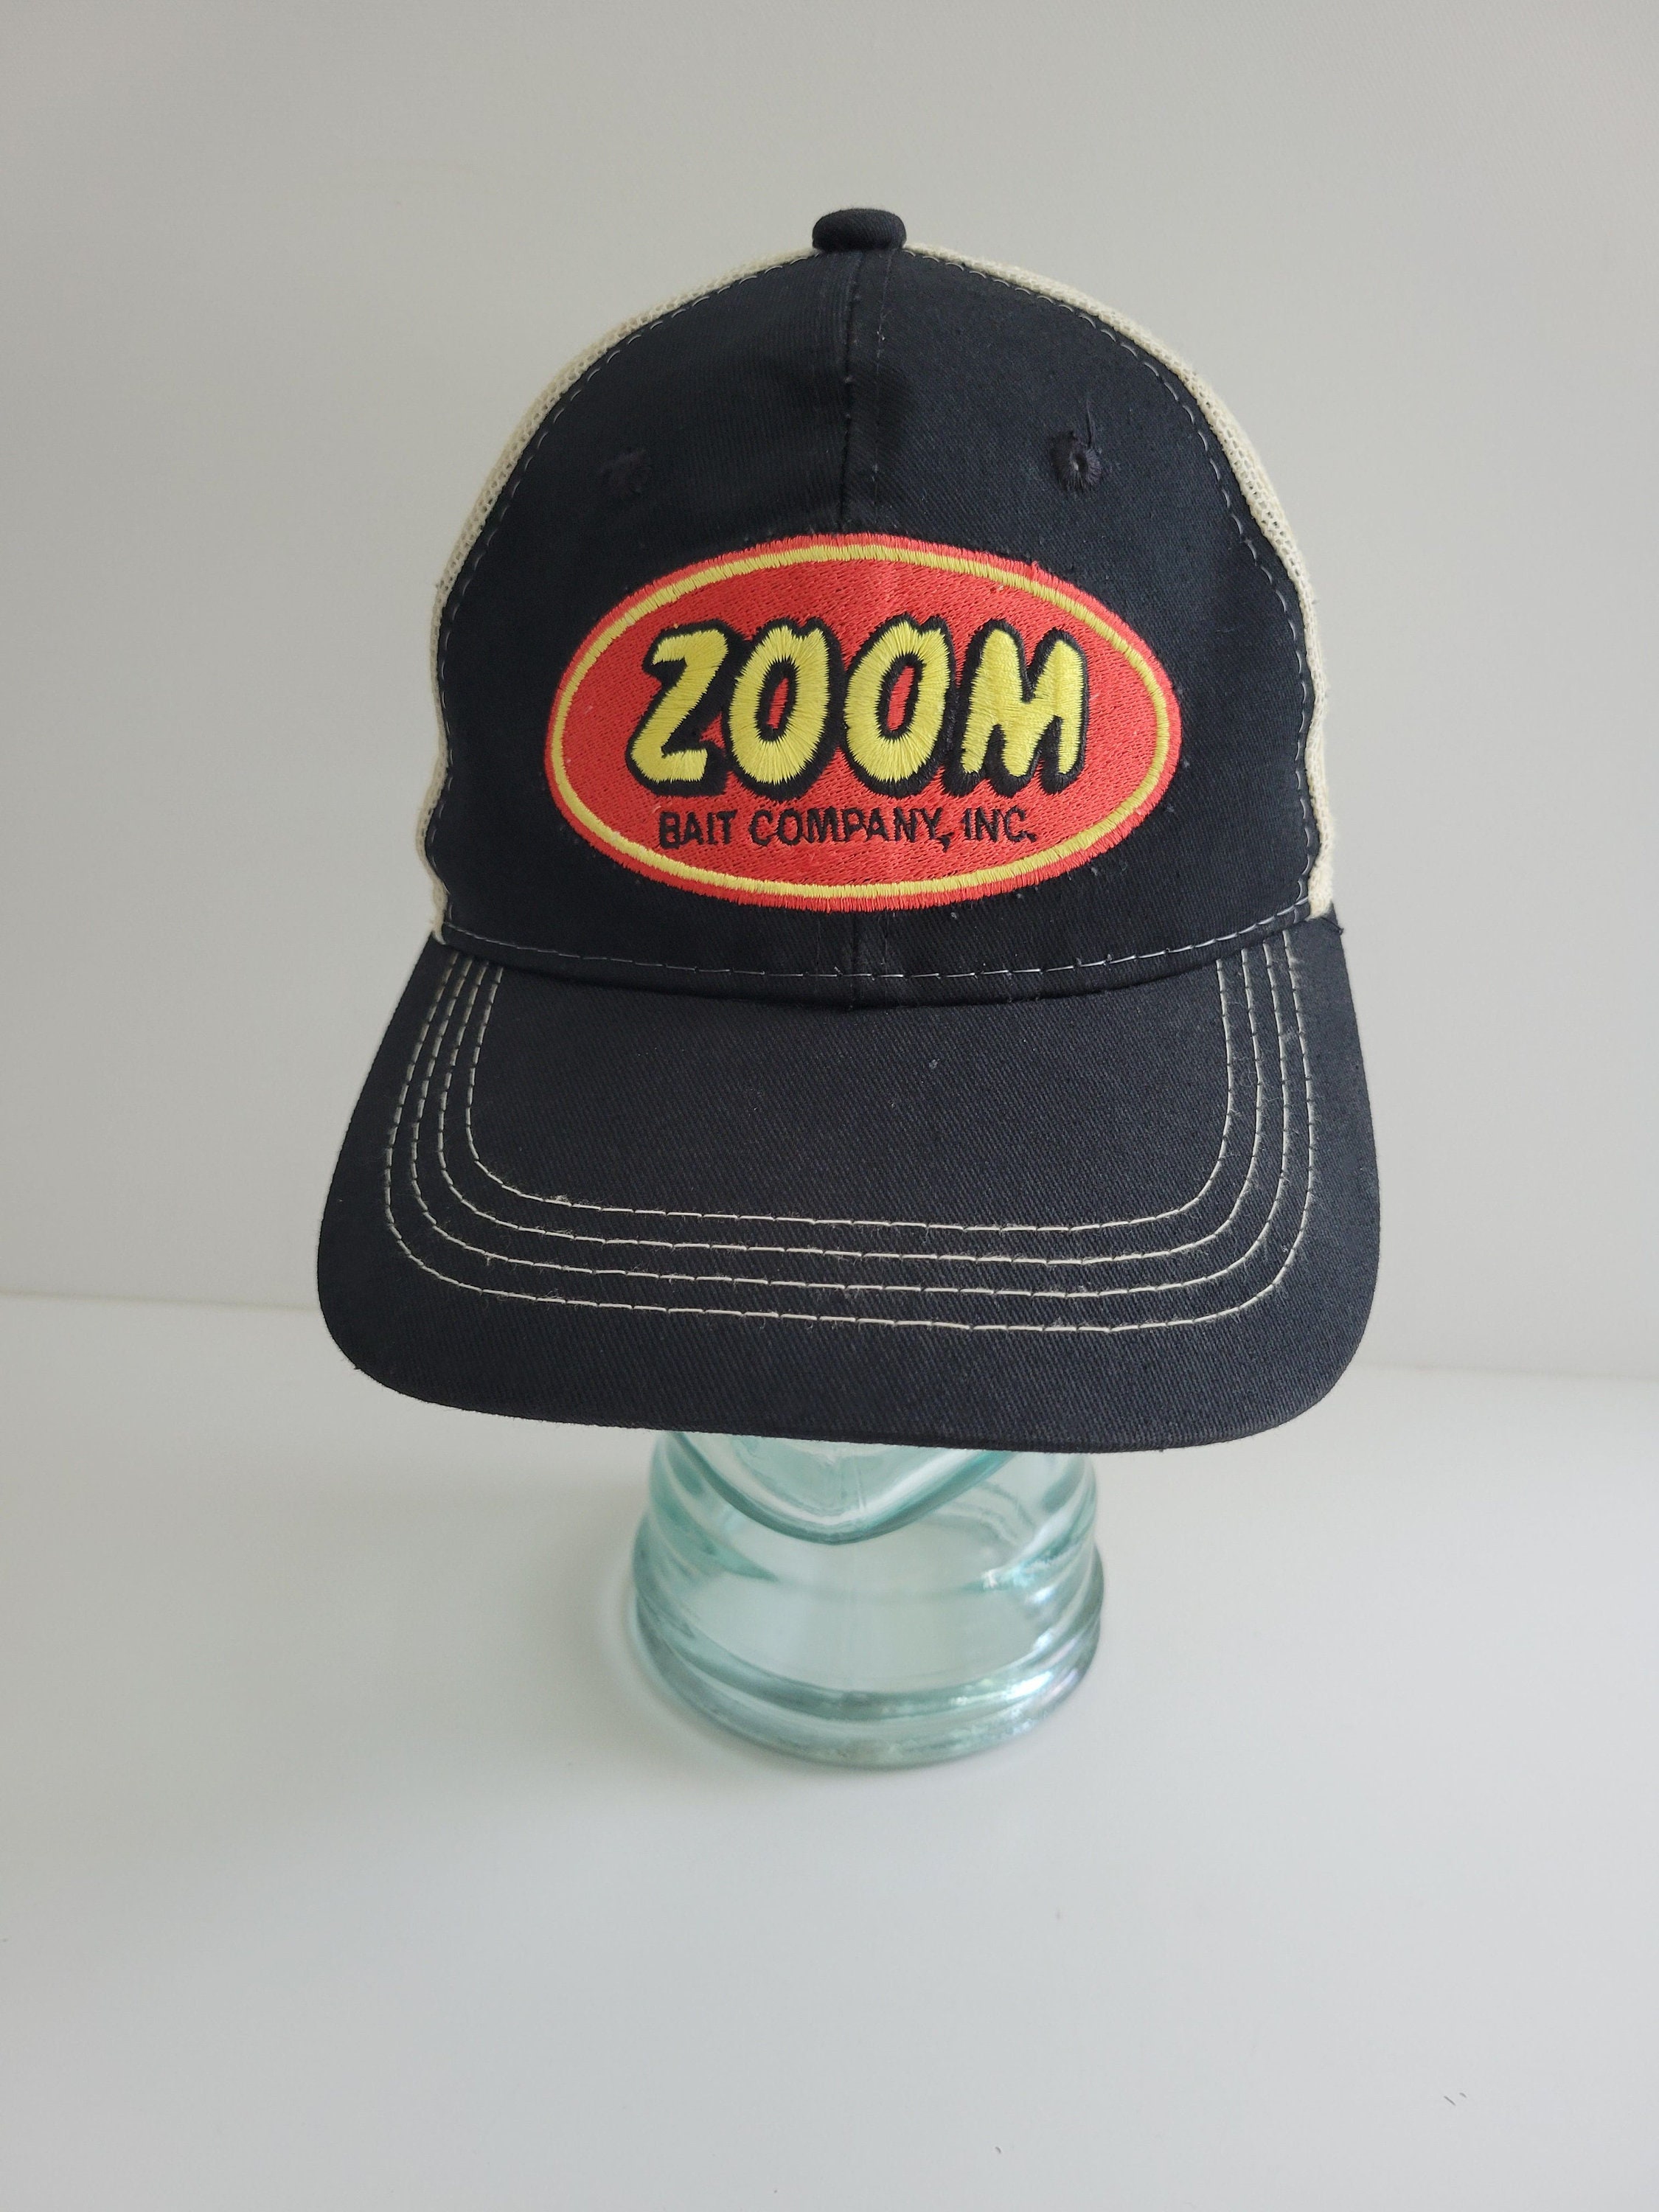 NOS Zoom Bait Company Mesh Back Black and Cream Hat -  Australia